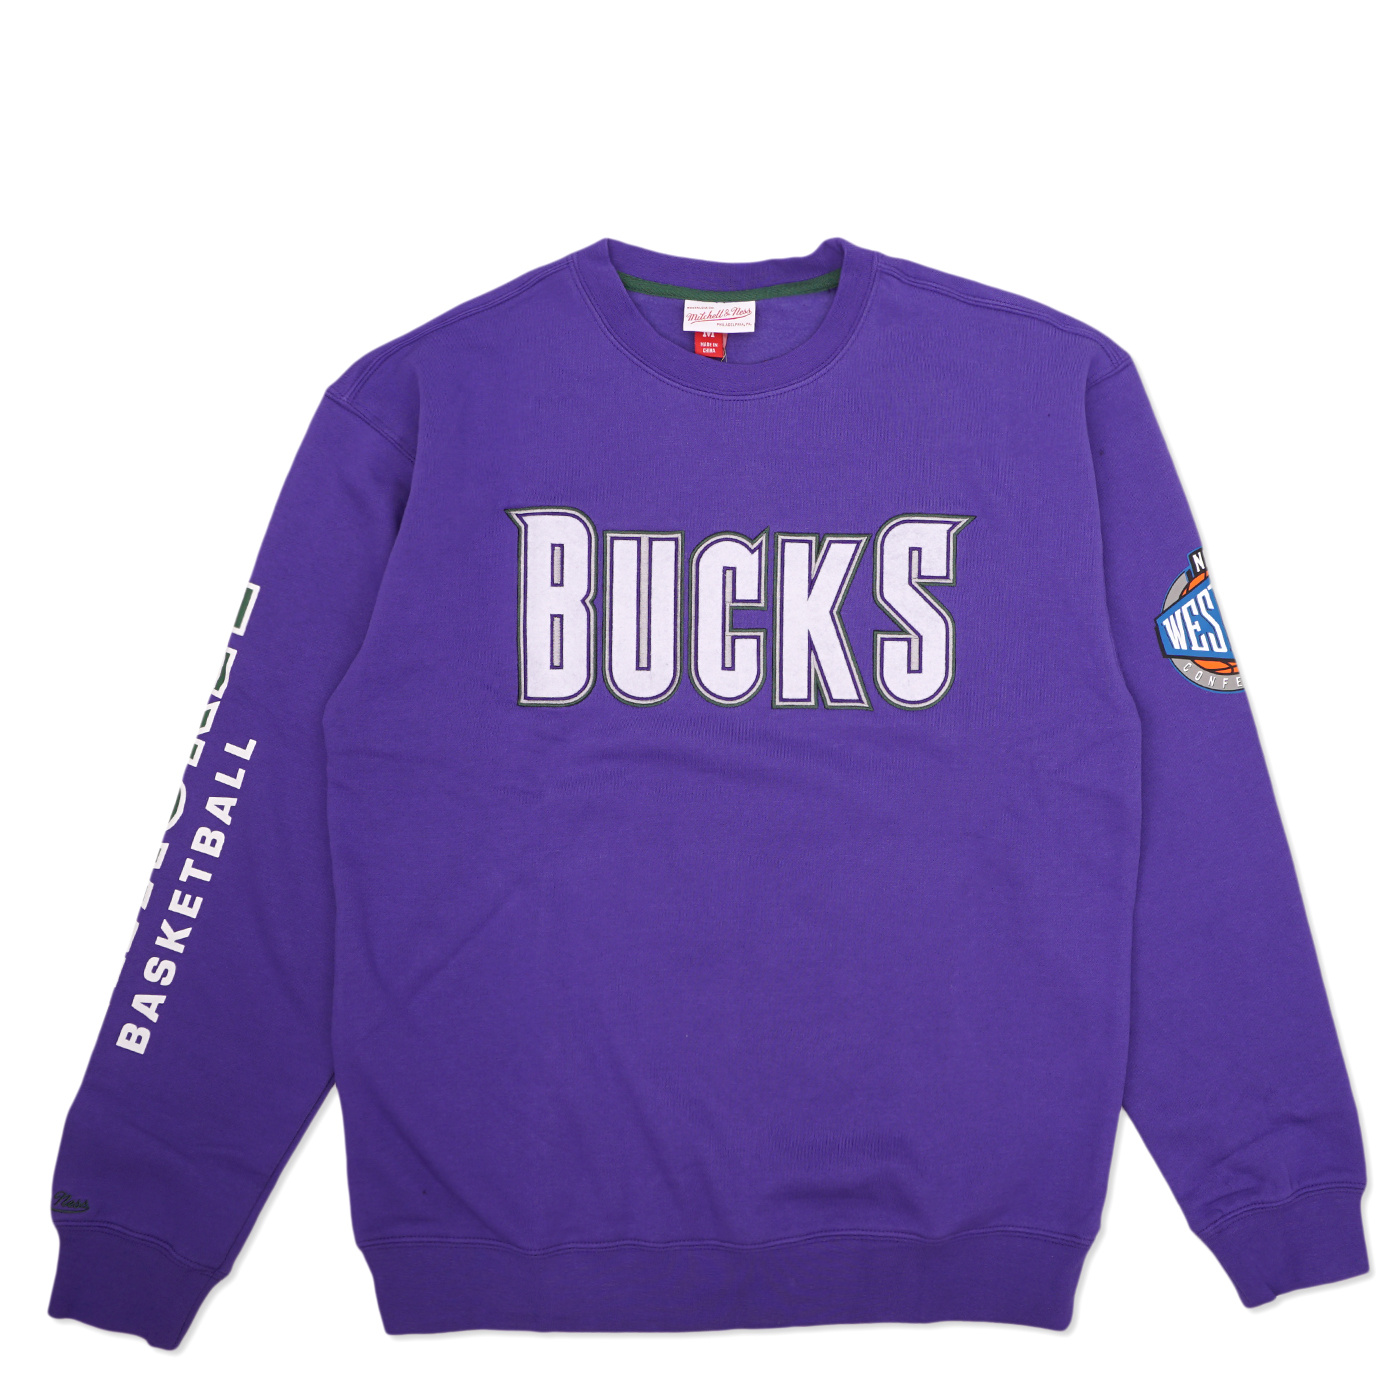 Bucks There And Back Crewneck Sweatshirt